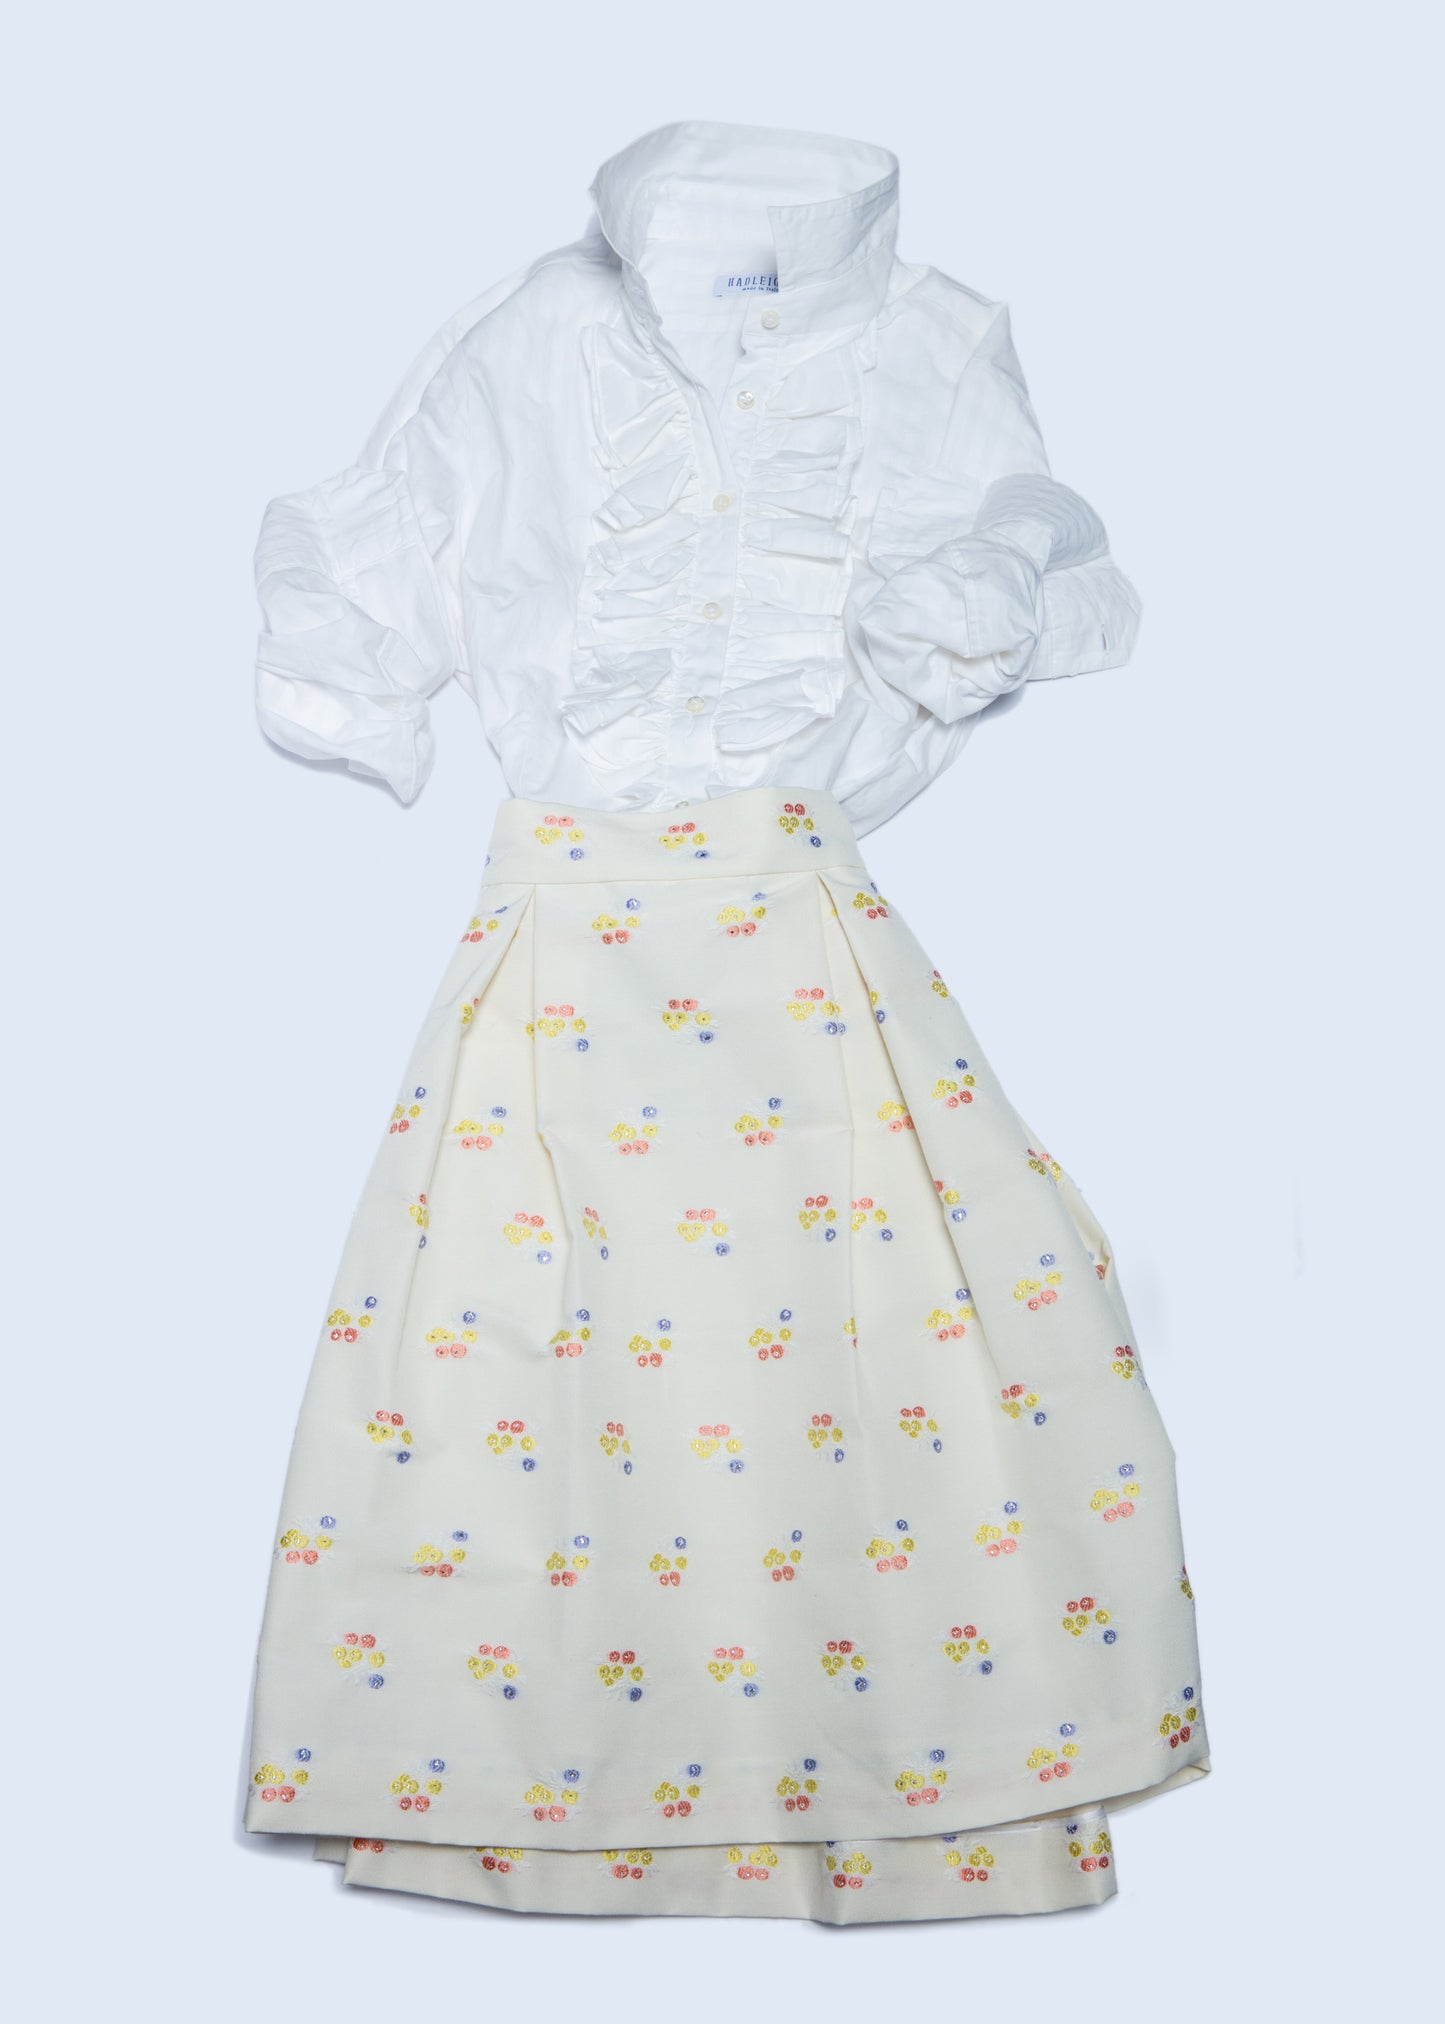 Eleanor Skirt in Cream Flowers